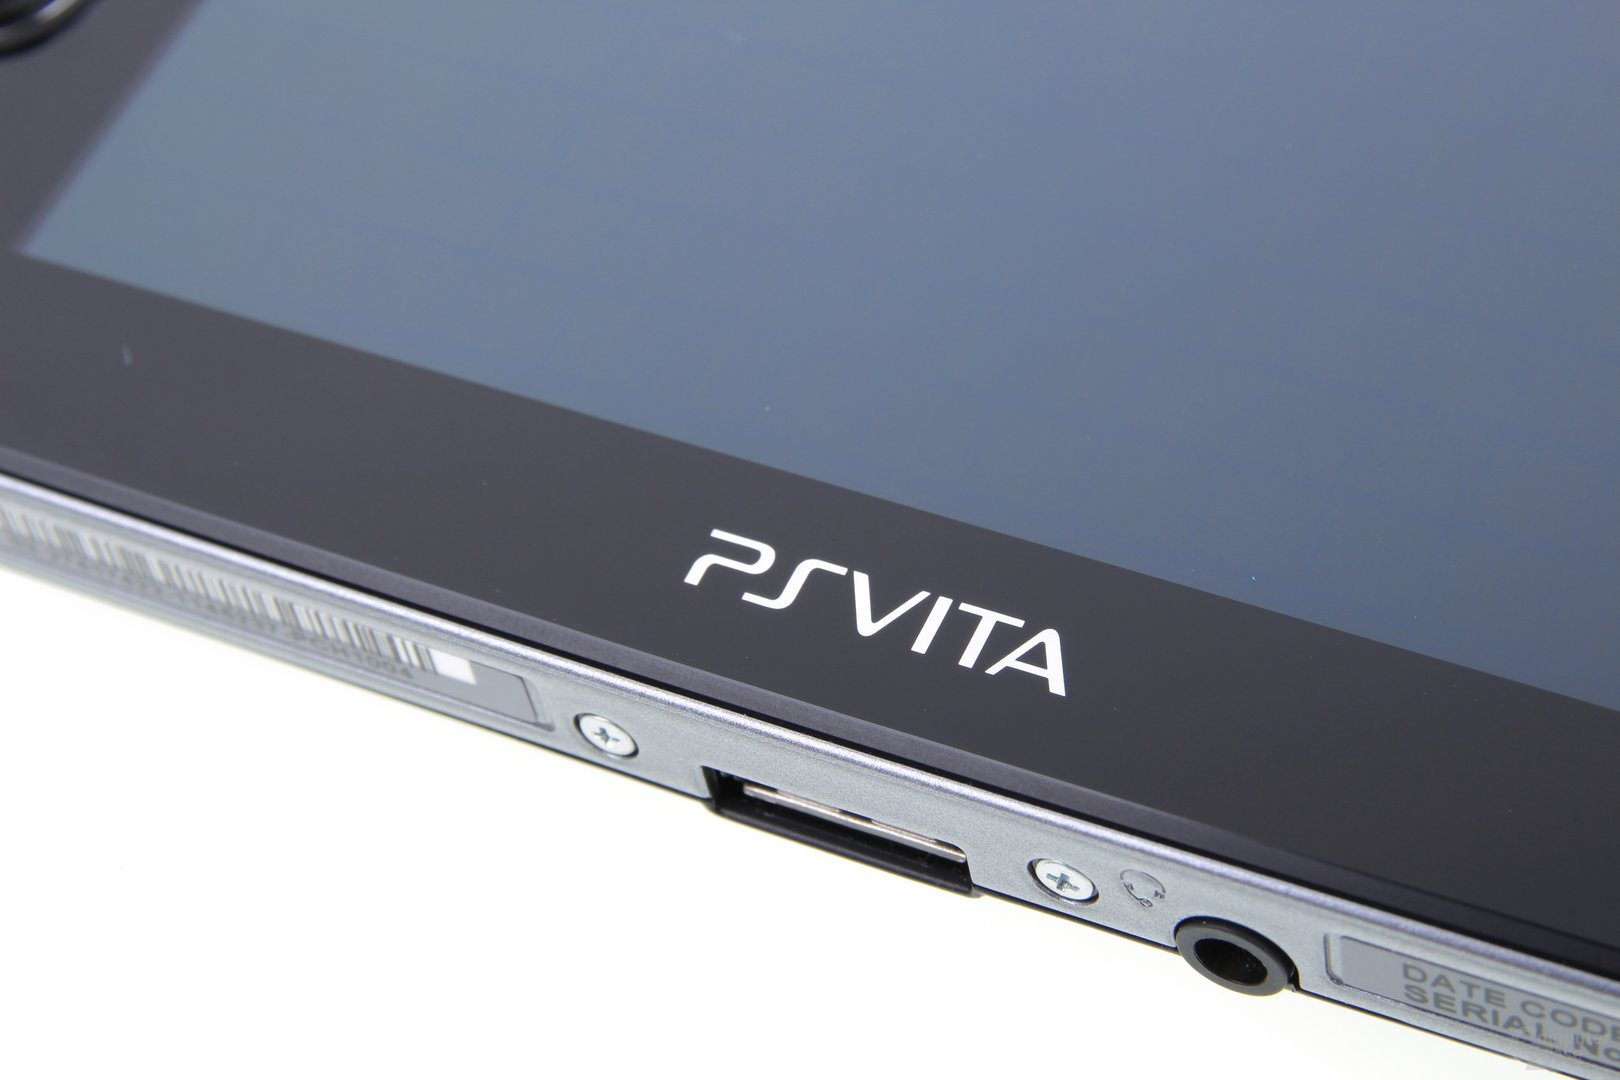 PS Vita - Logo